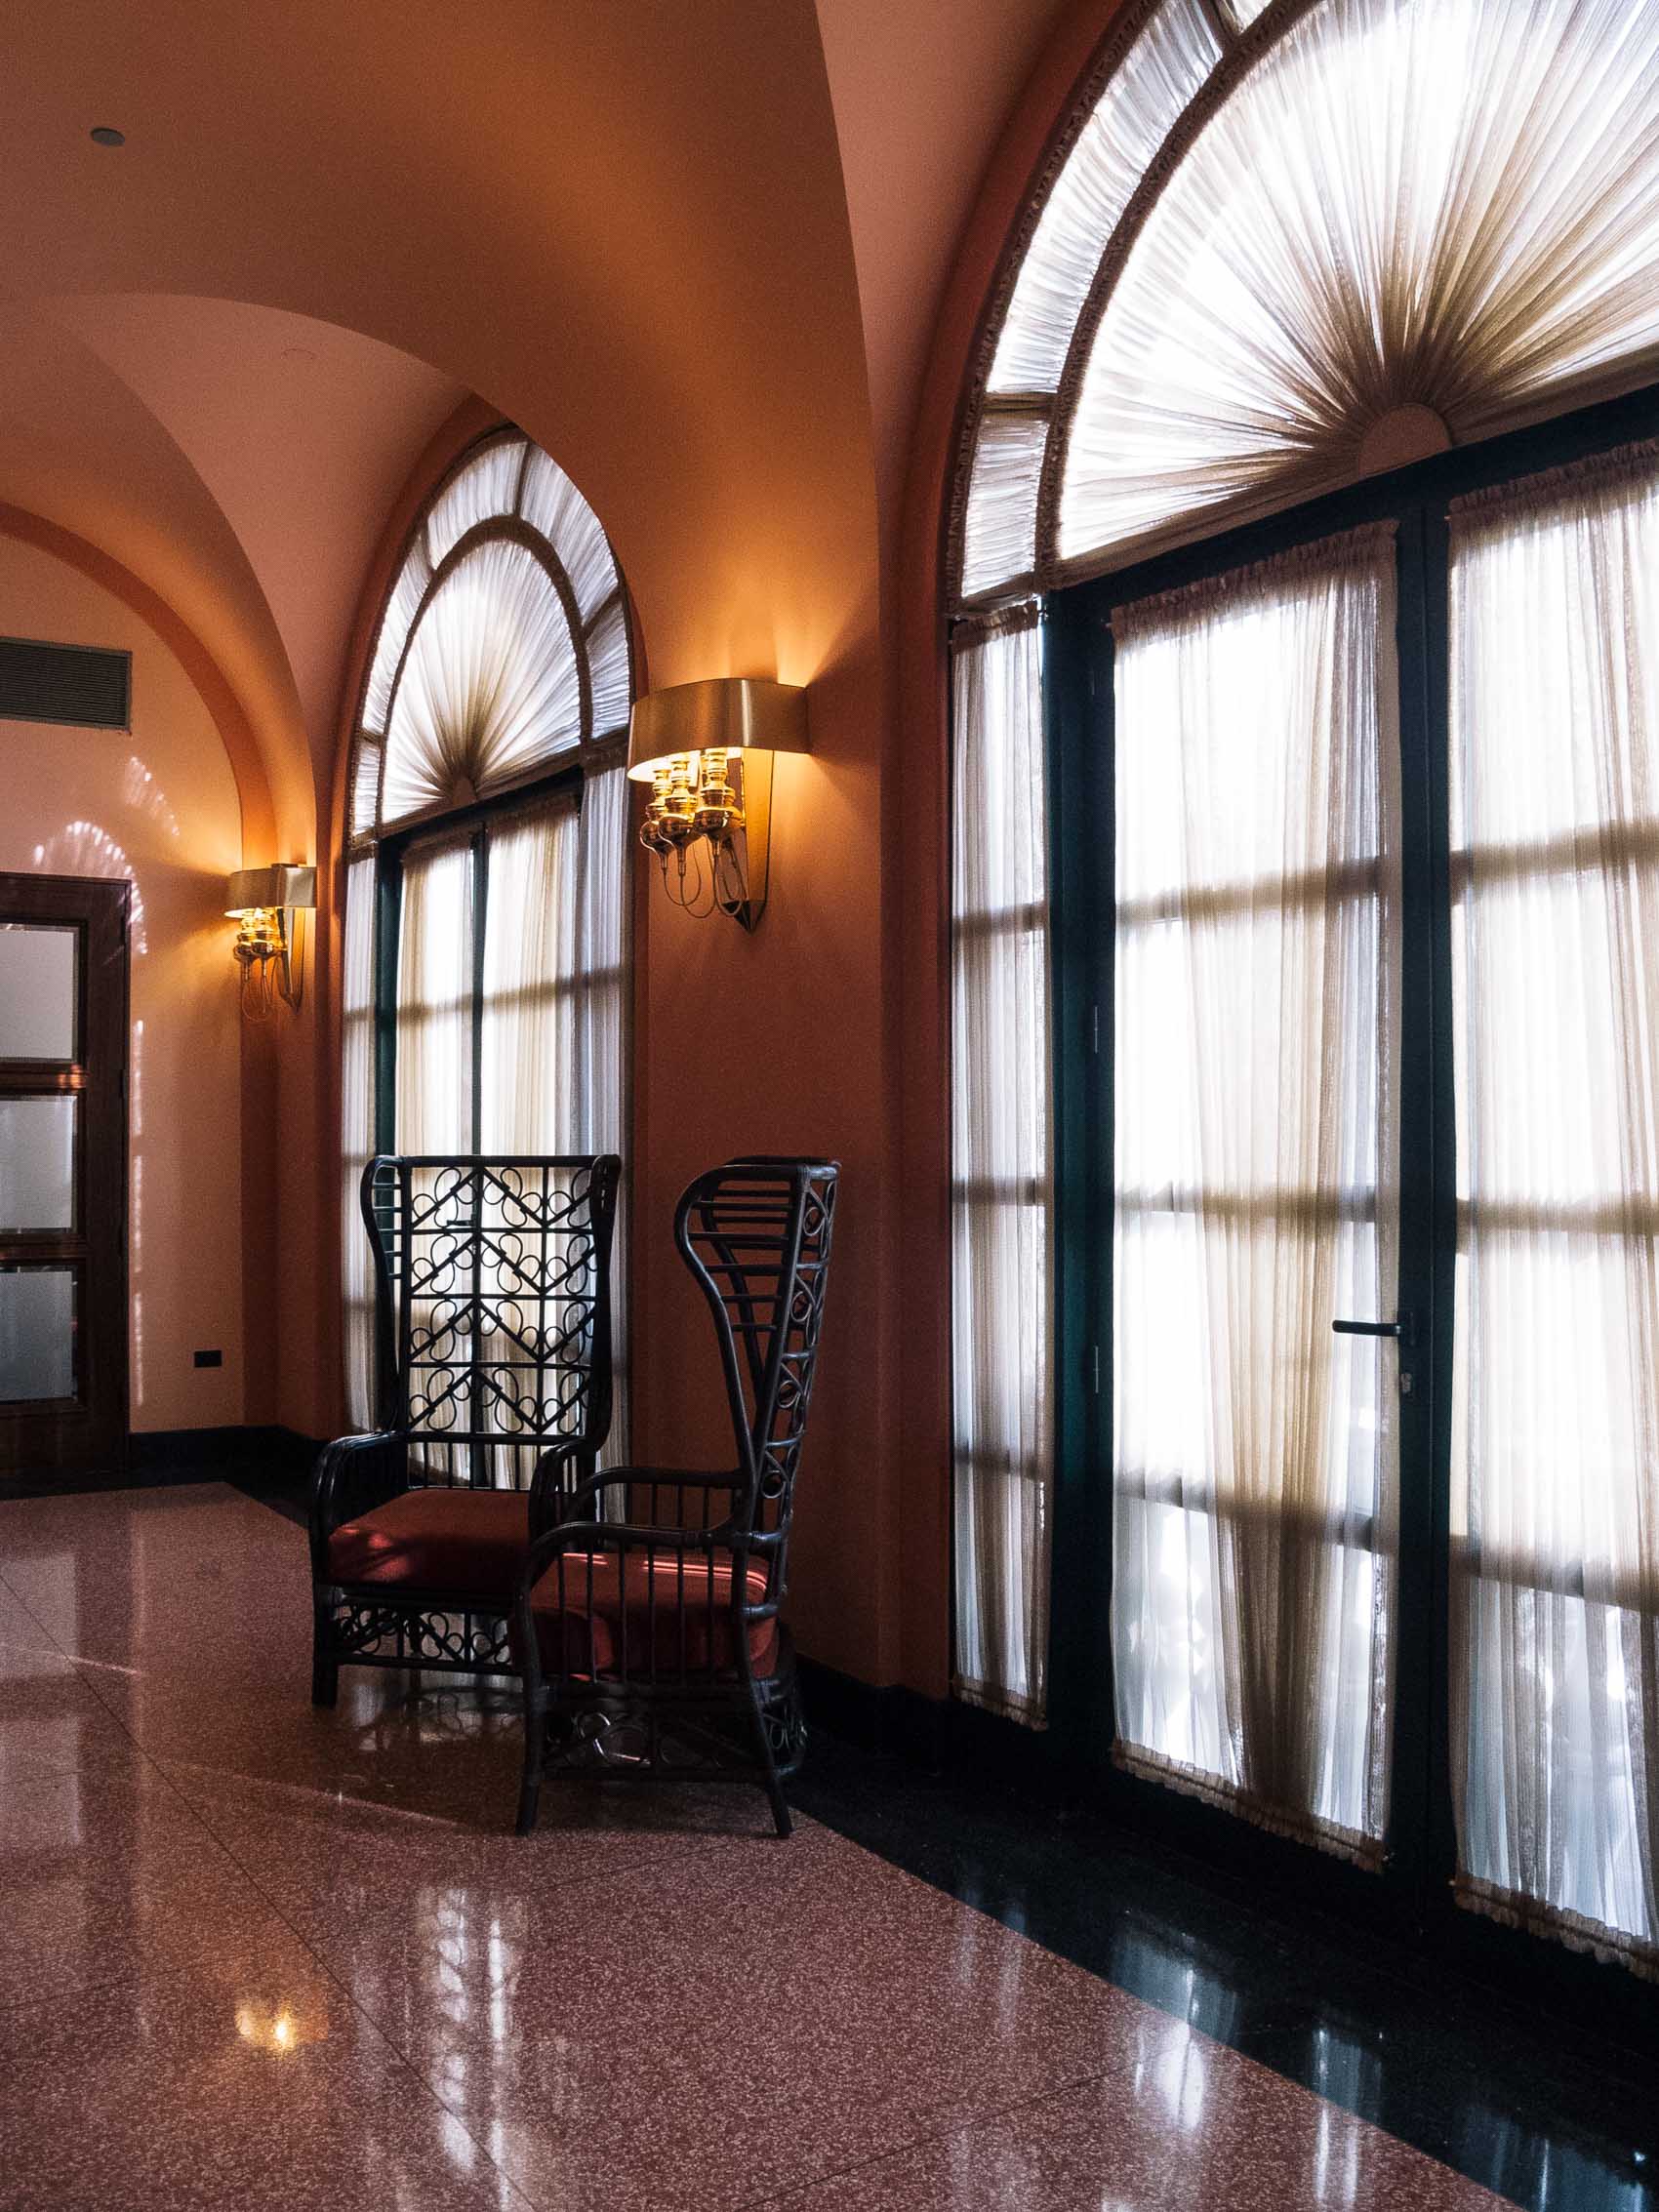 Tropical art deco interiors of the Condado Vanderbilt hotel's original 1919 building in San Juan, Puerto Rico